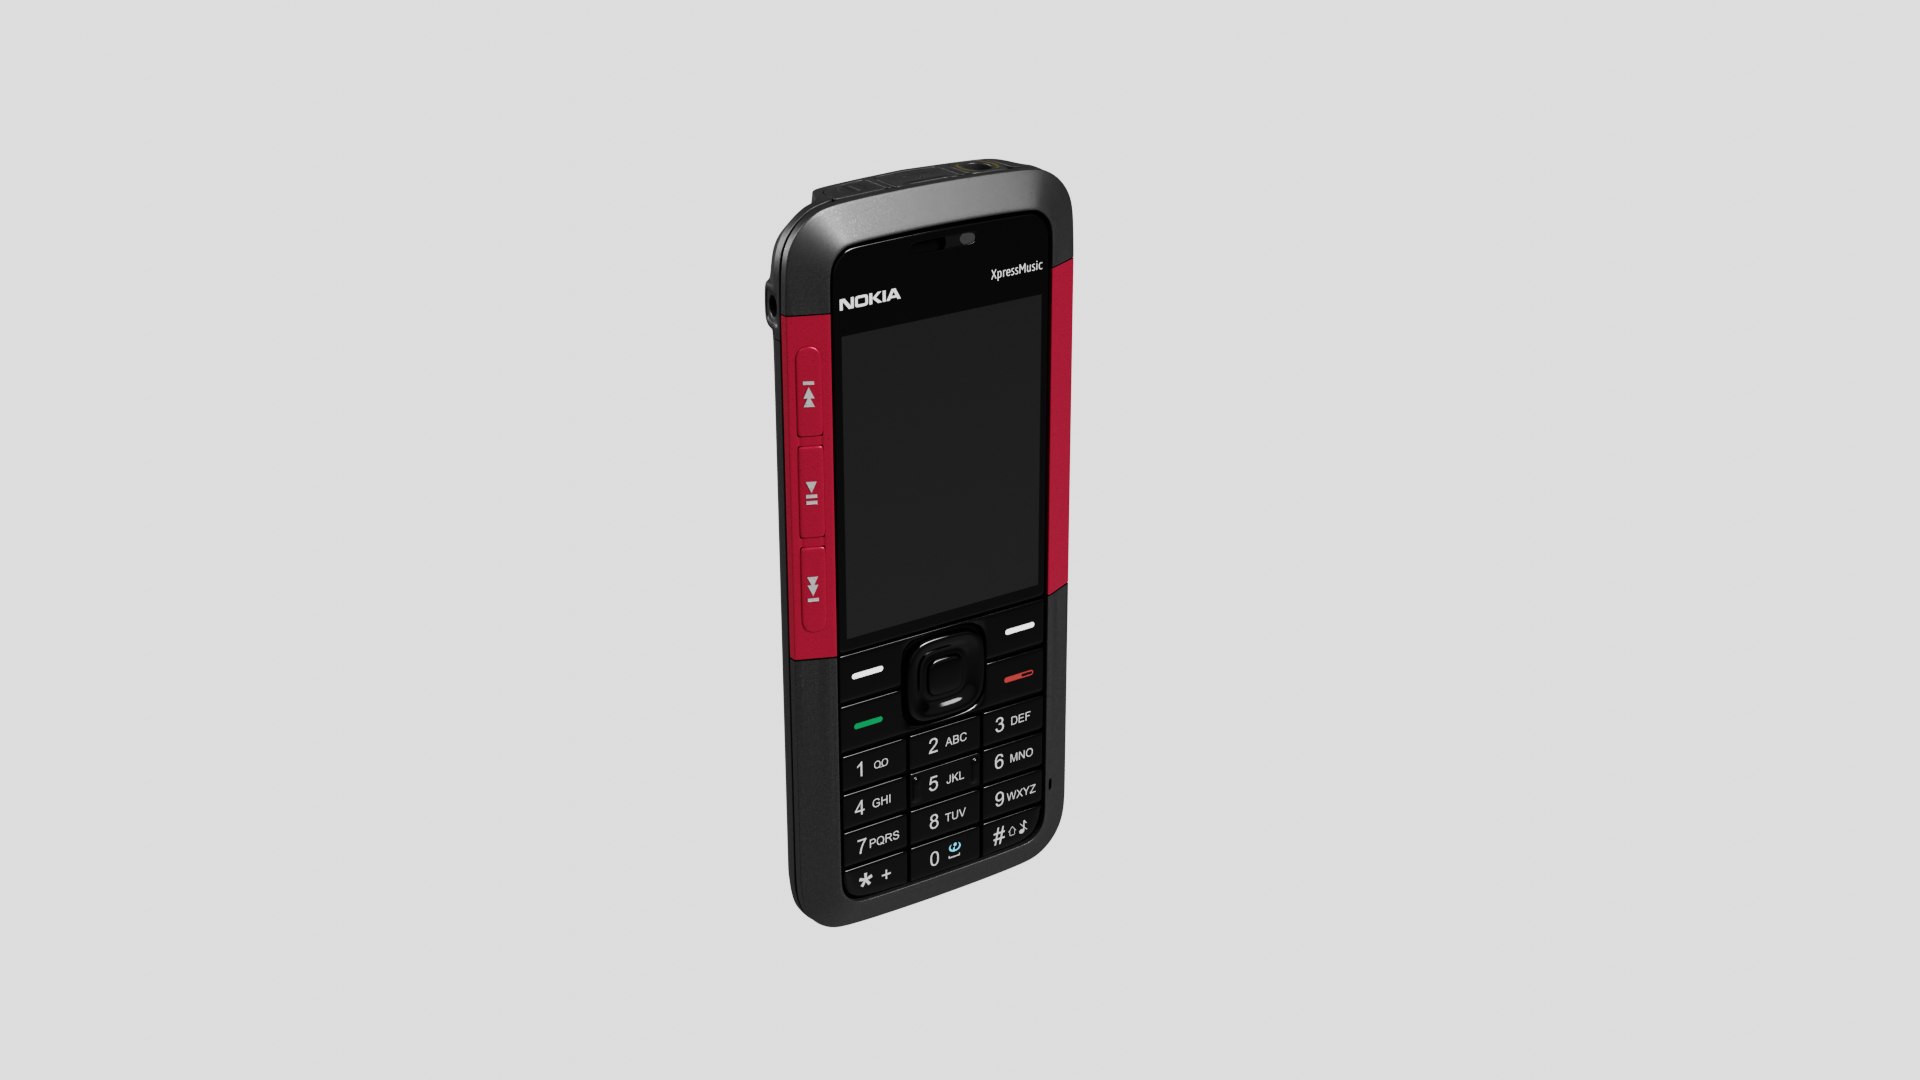 Nokia XpressMusic 5130 (Unlocked) Cellular Phone | eBay